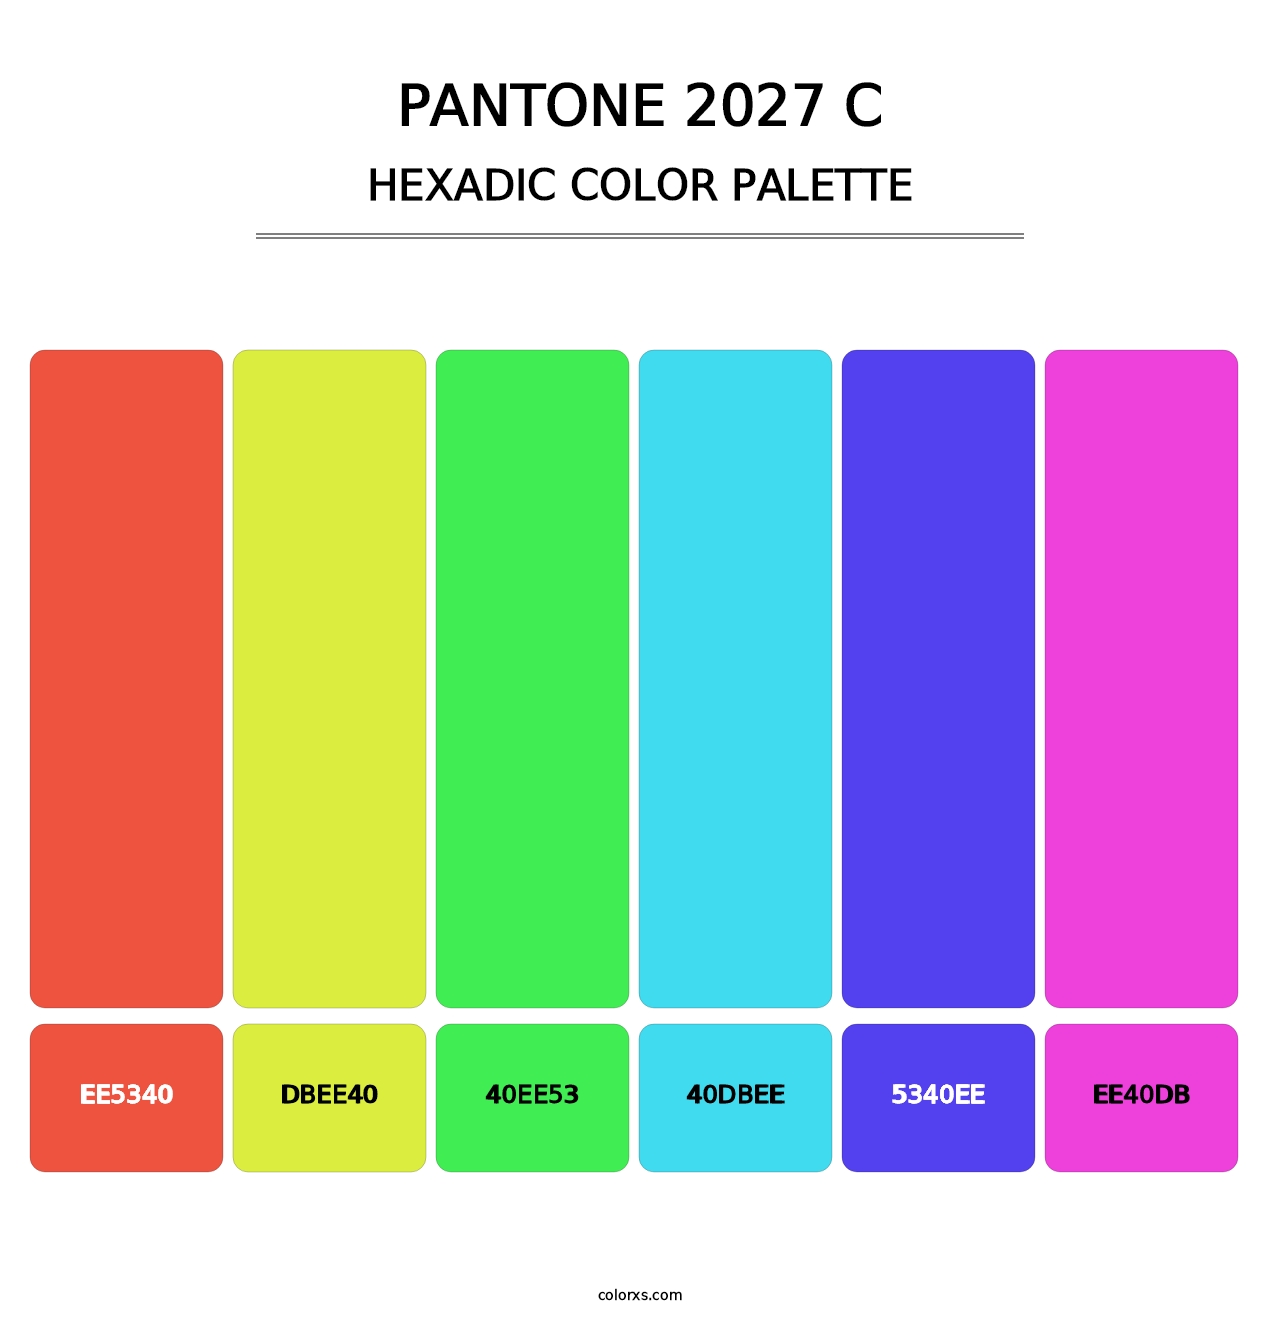 PANTONE 2027 C - Hexadic Color Palette